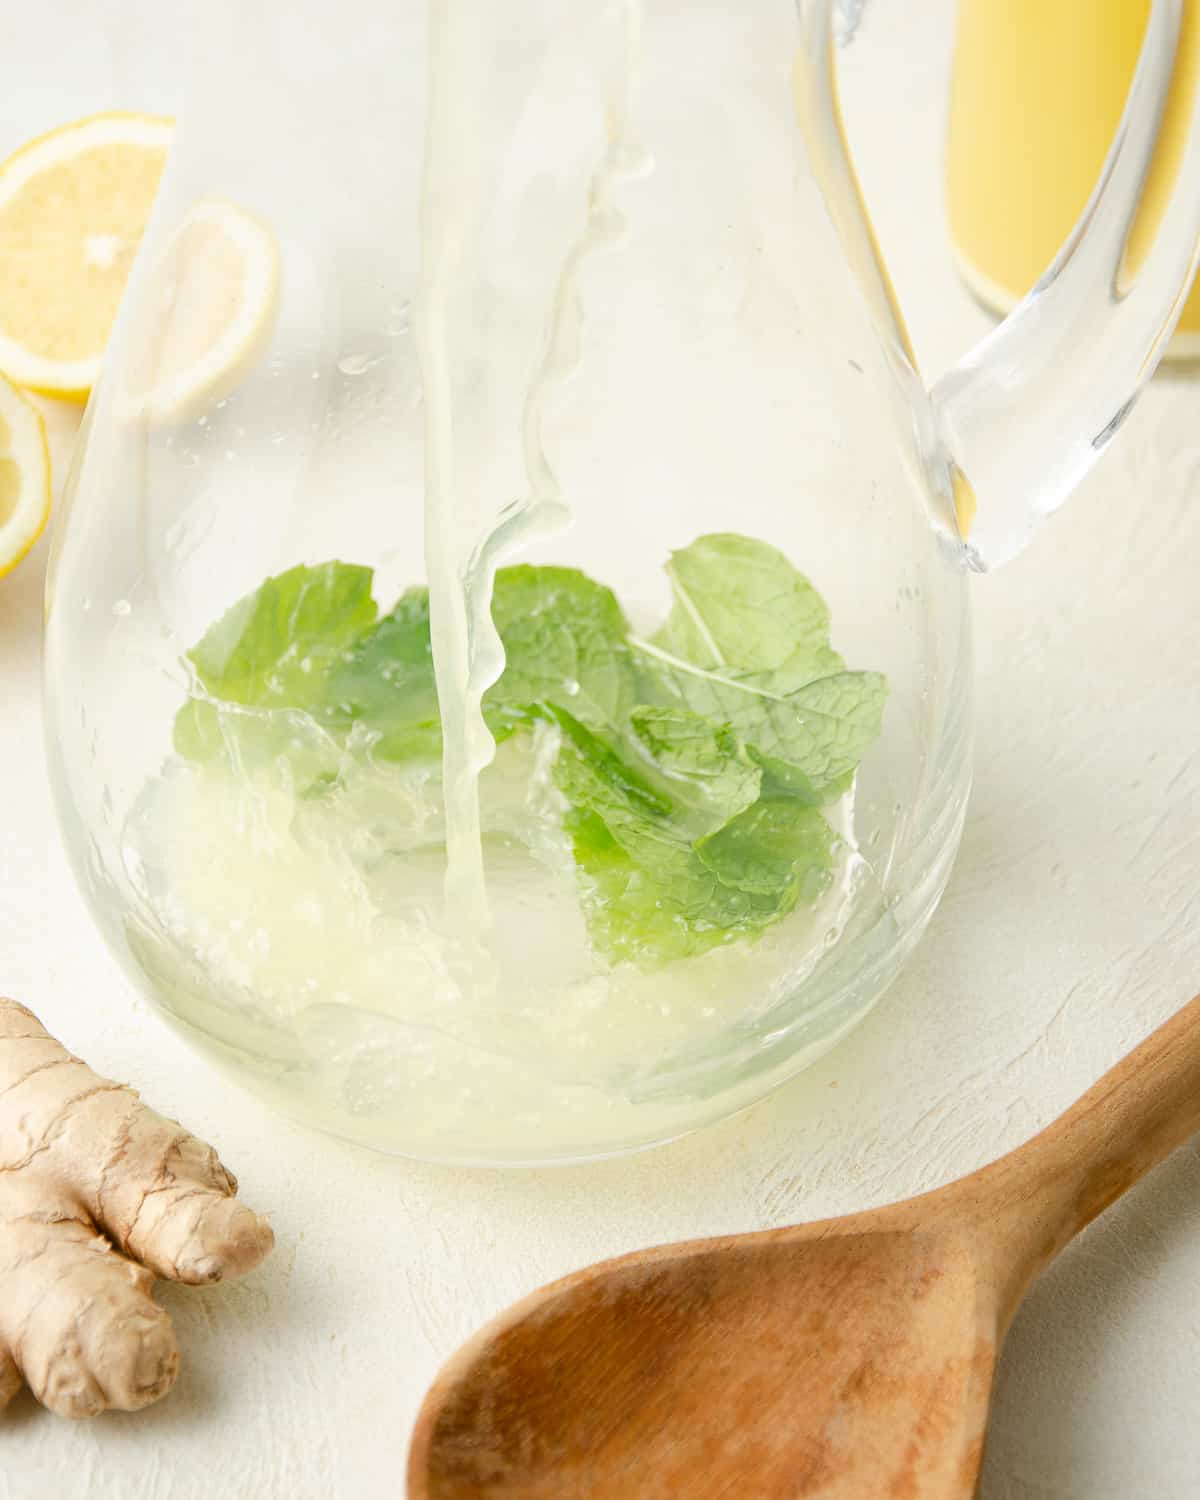 Adding fresh lemon juice to a glass pitcher.